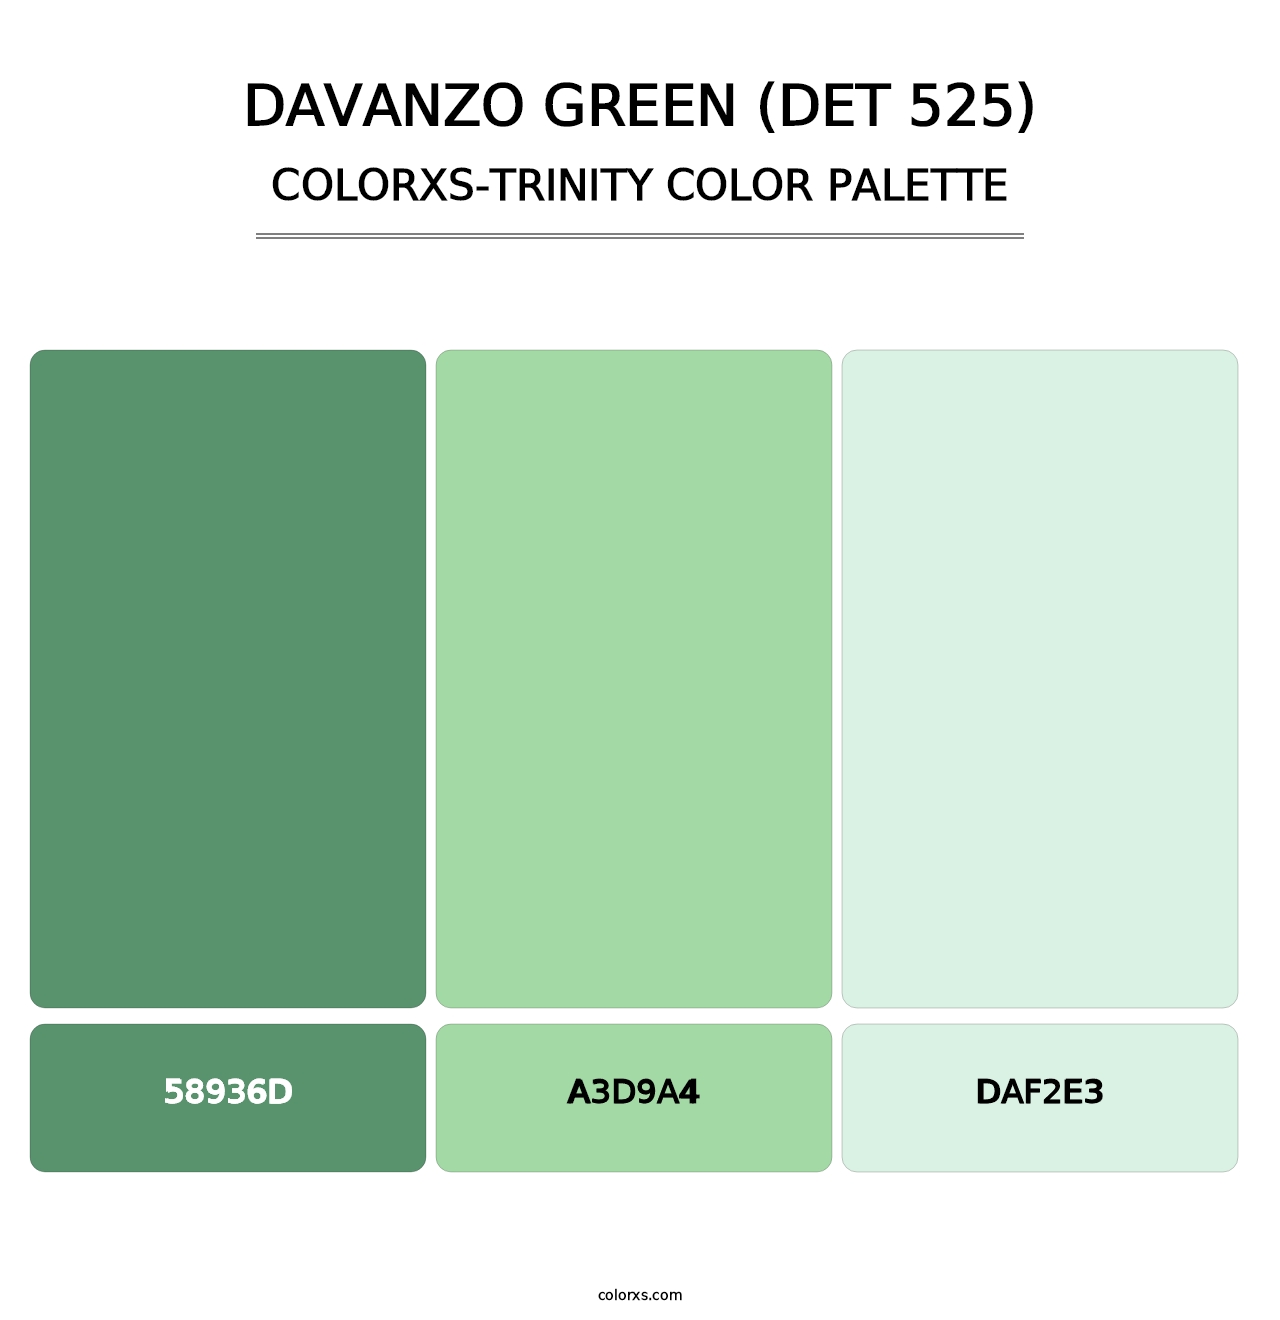 DaVanzo Green (DET 525) - Colorxs Trinity Palette